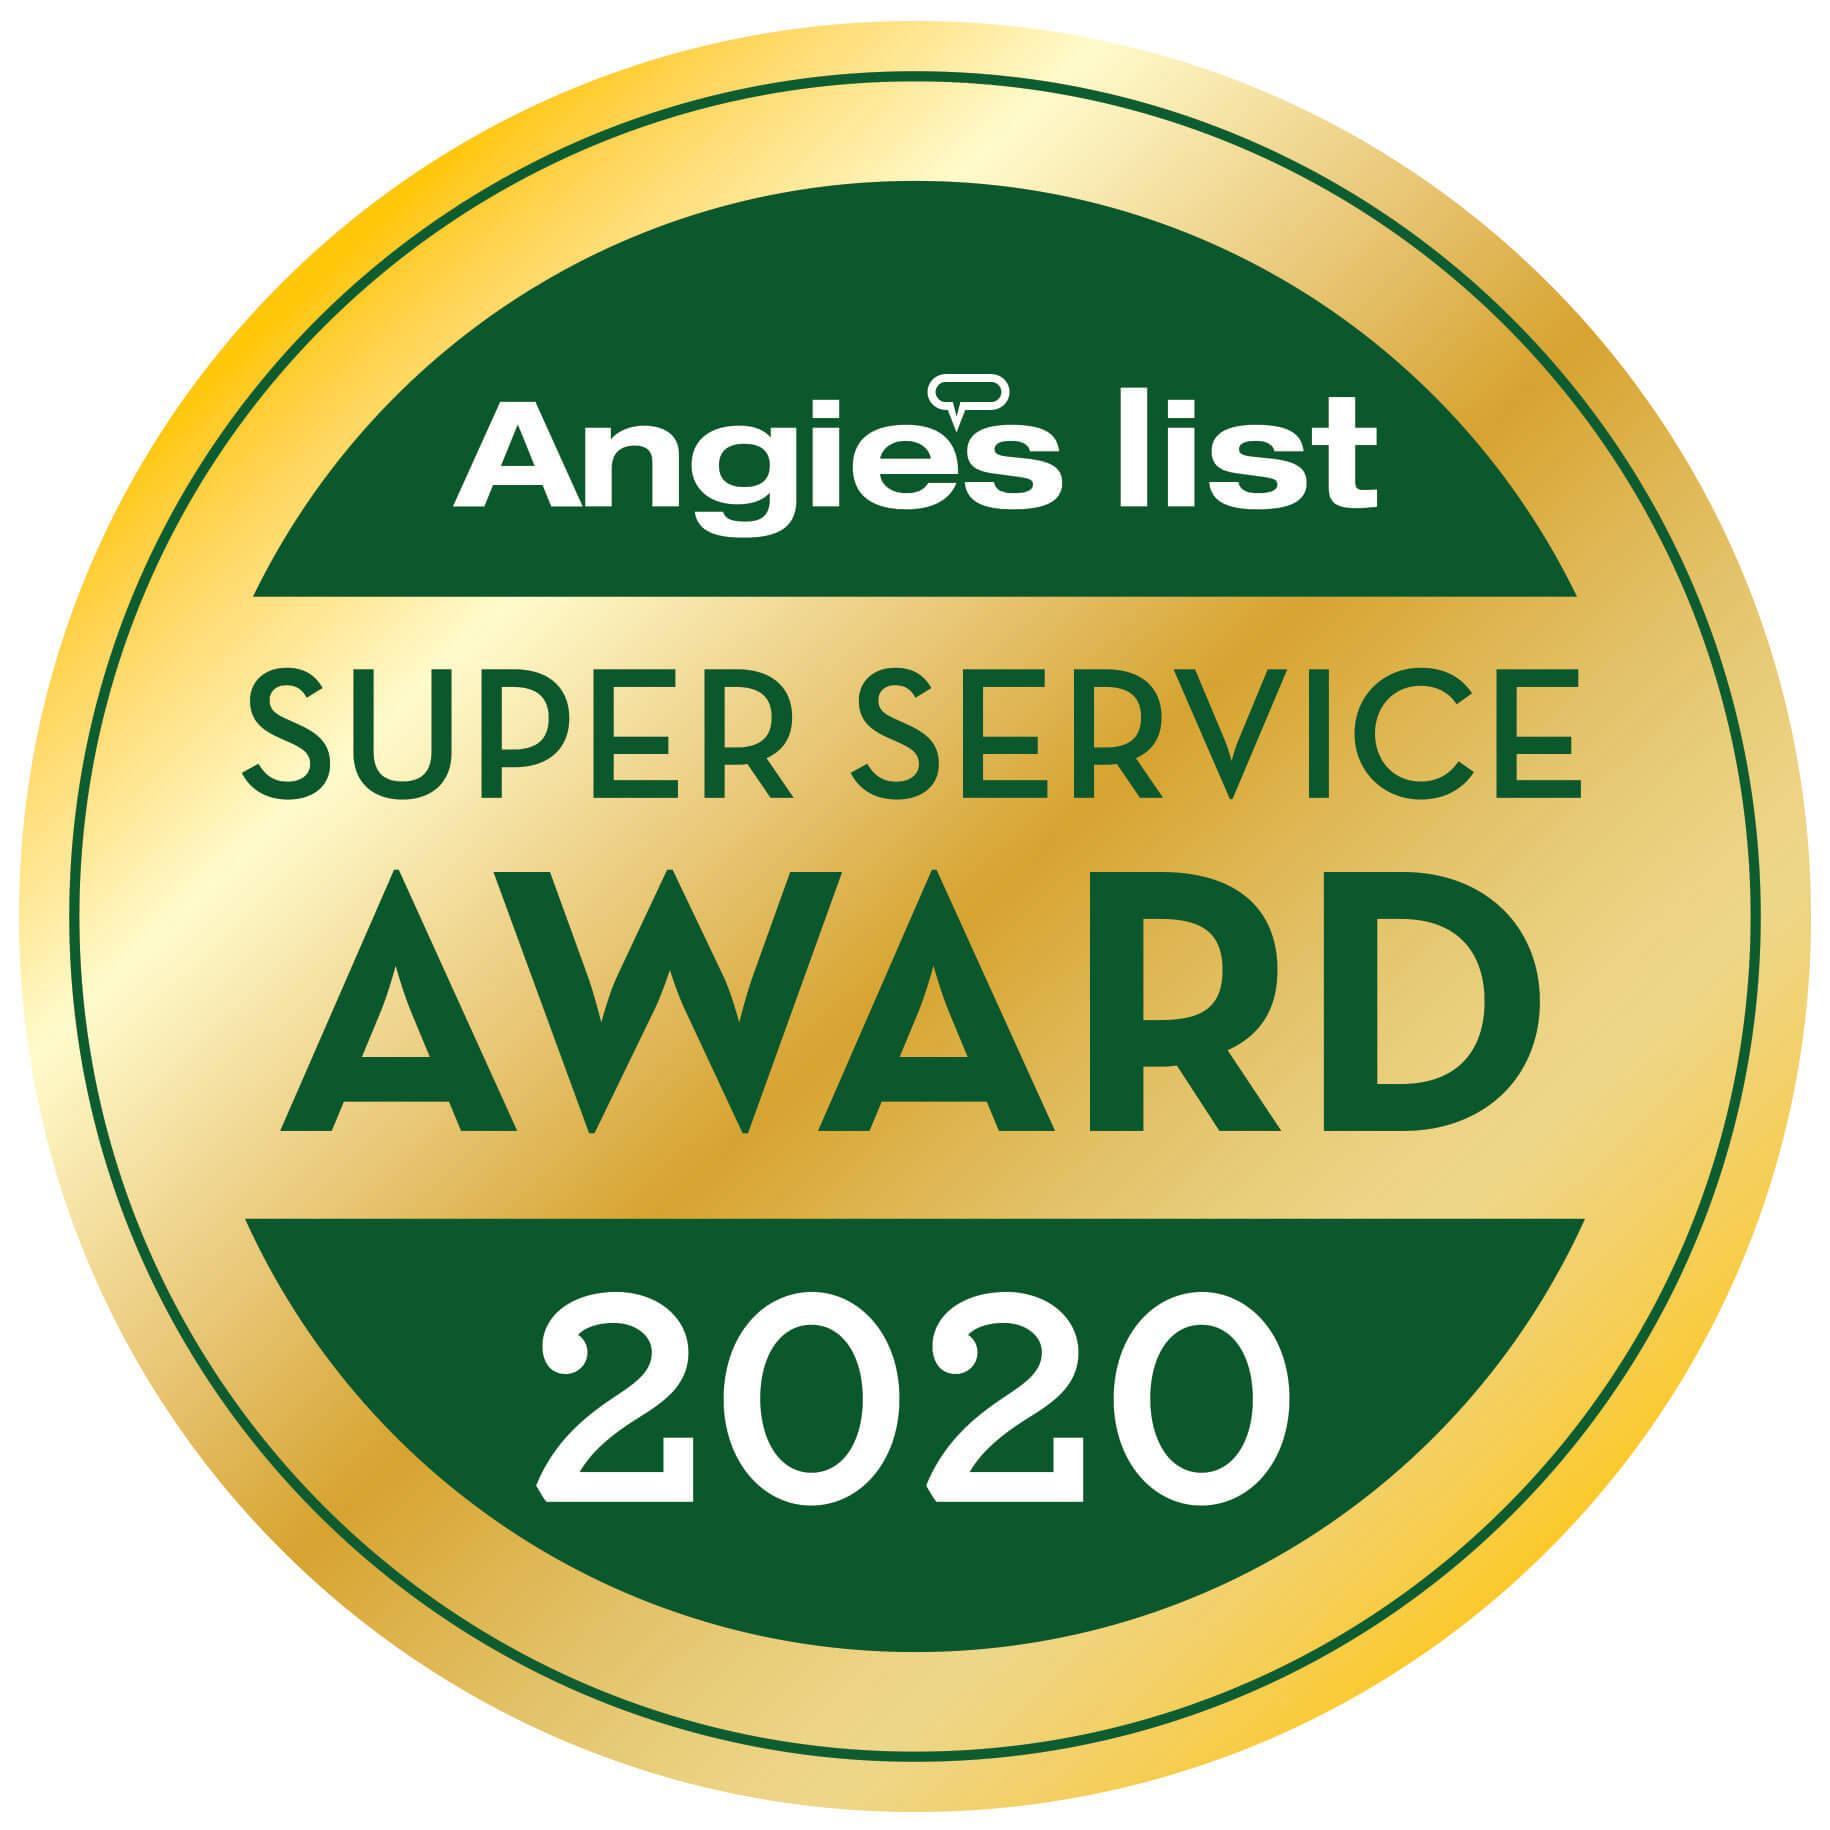 angies-list-super-service-award-winner-in-Easton